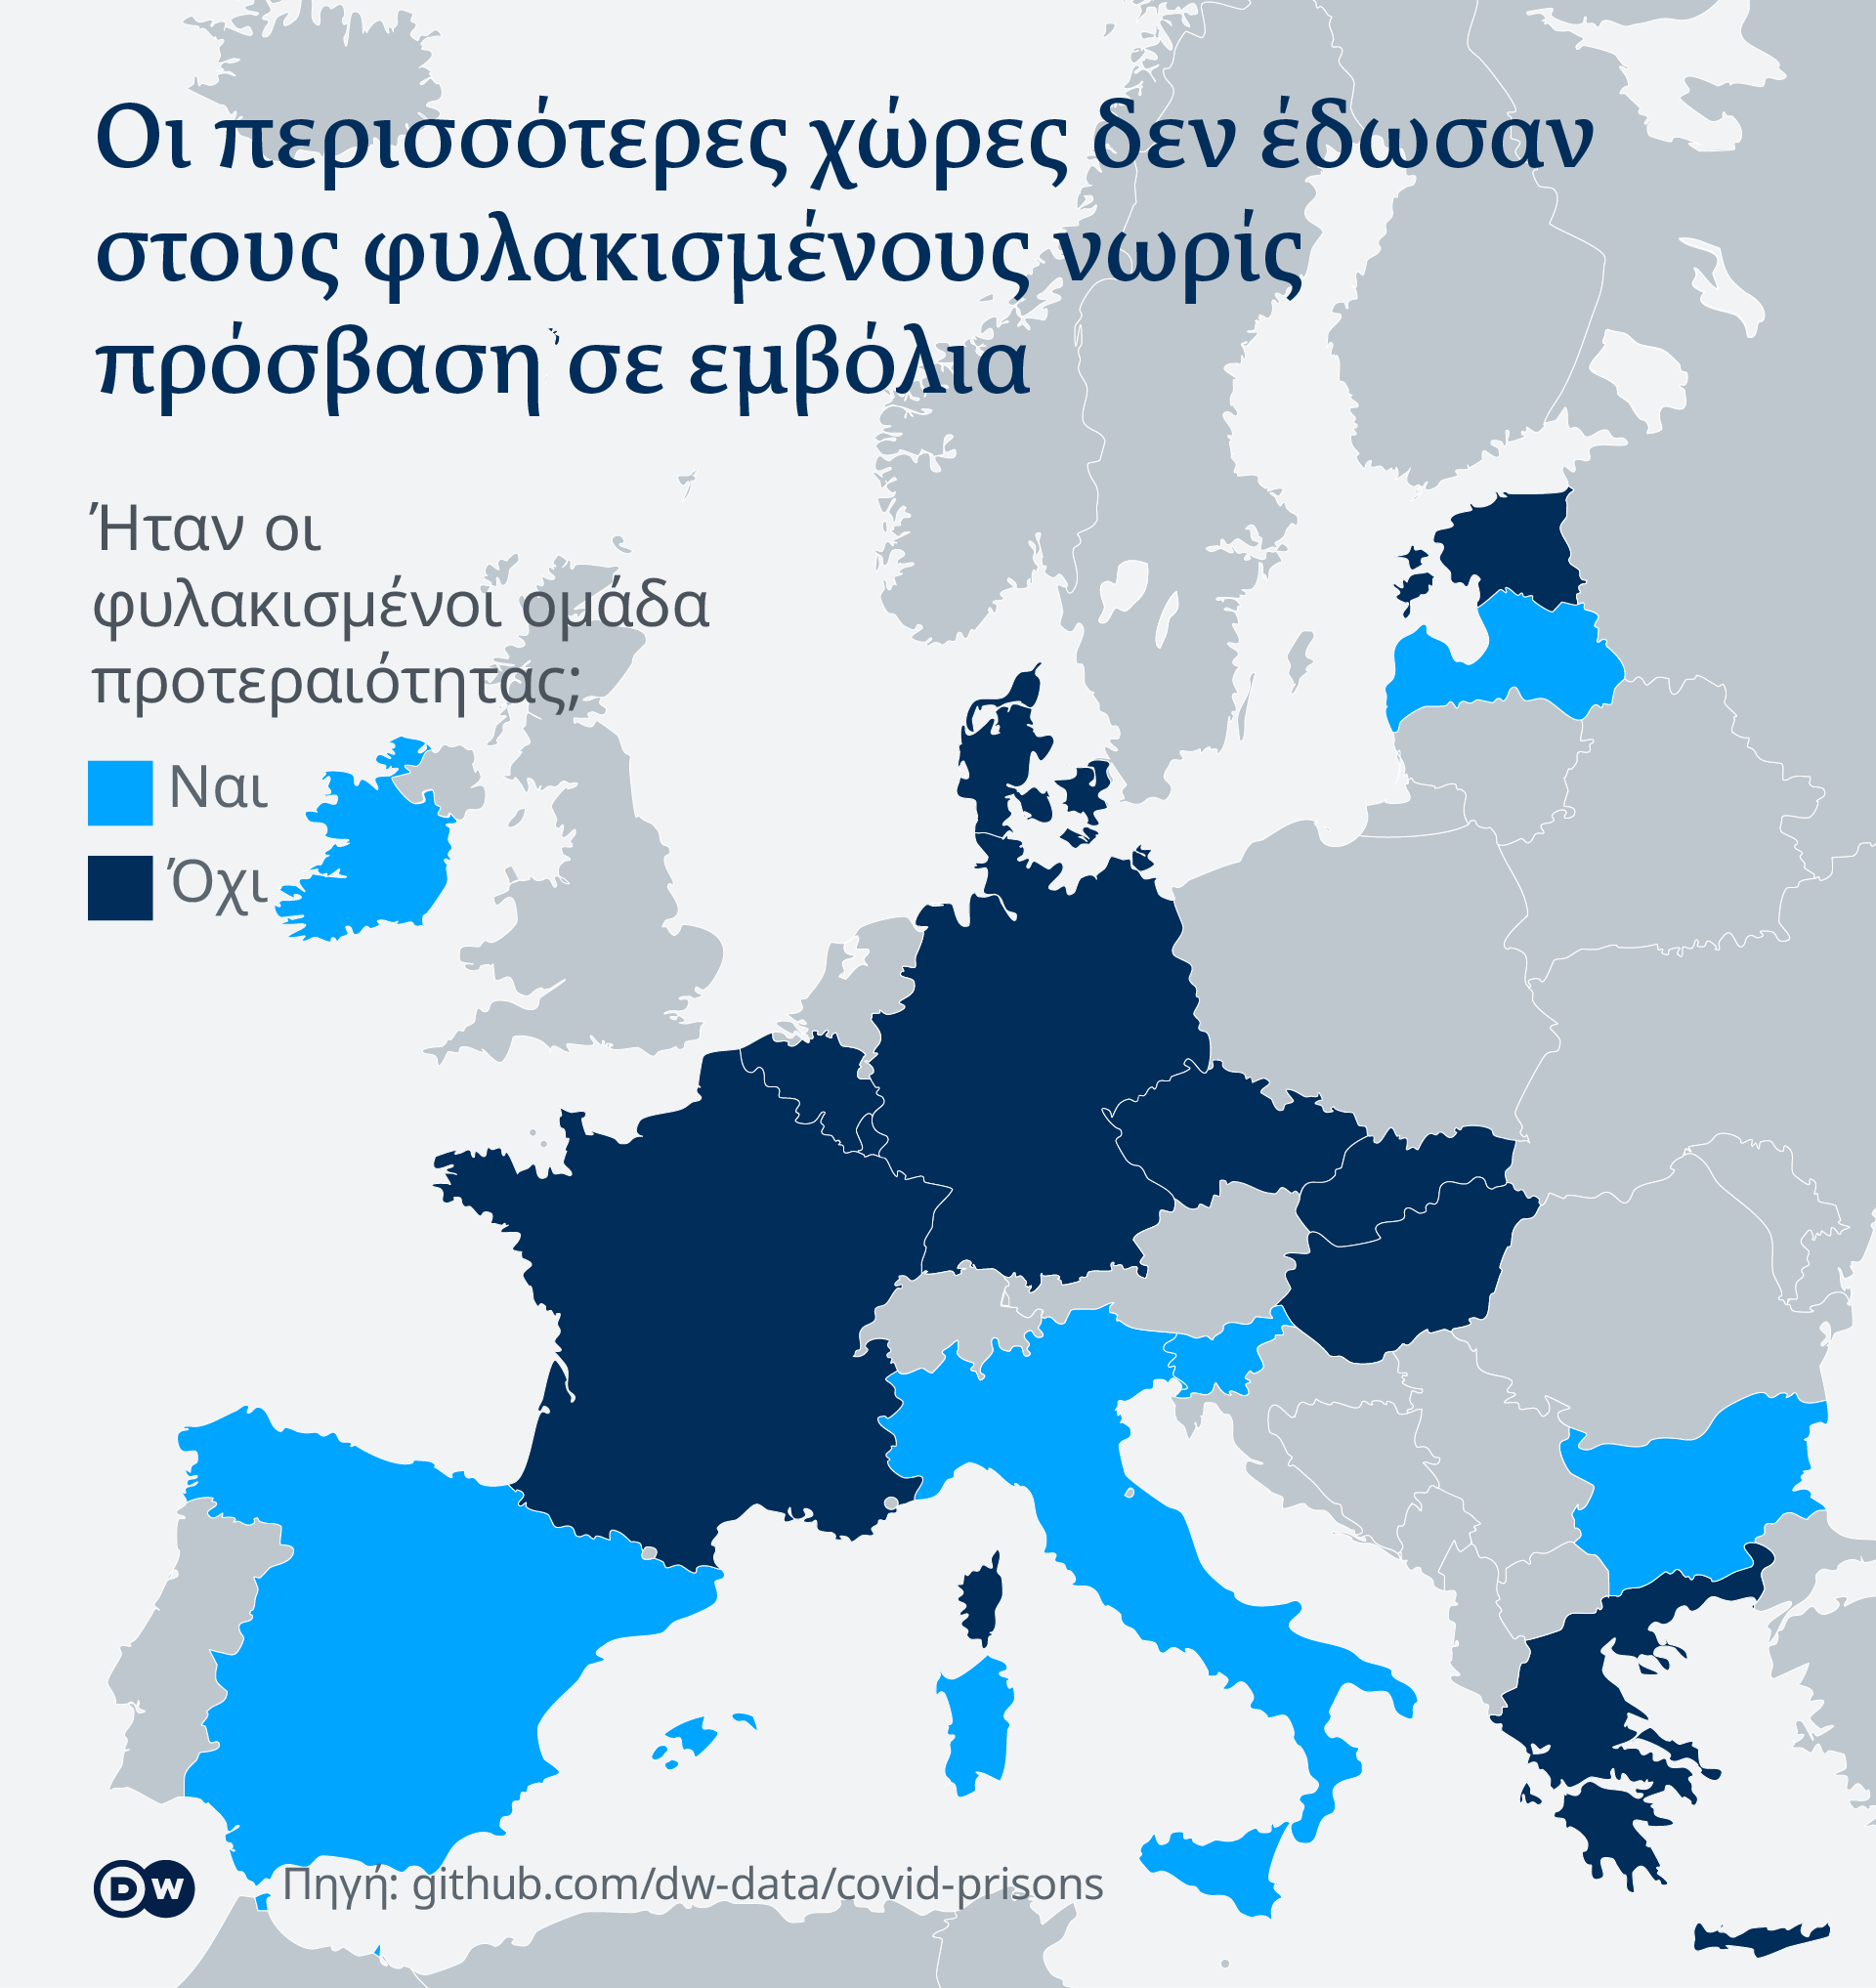 Data visualization prisons and Covid EDJNet EL Greek